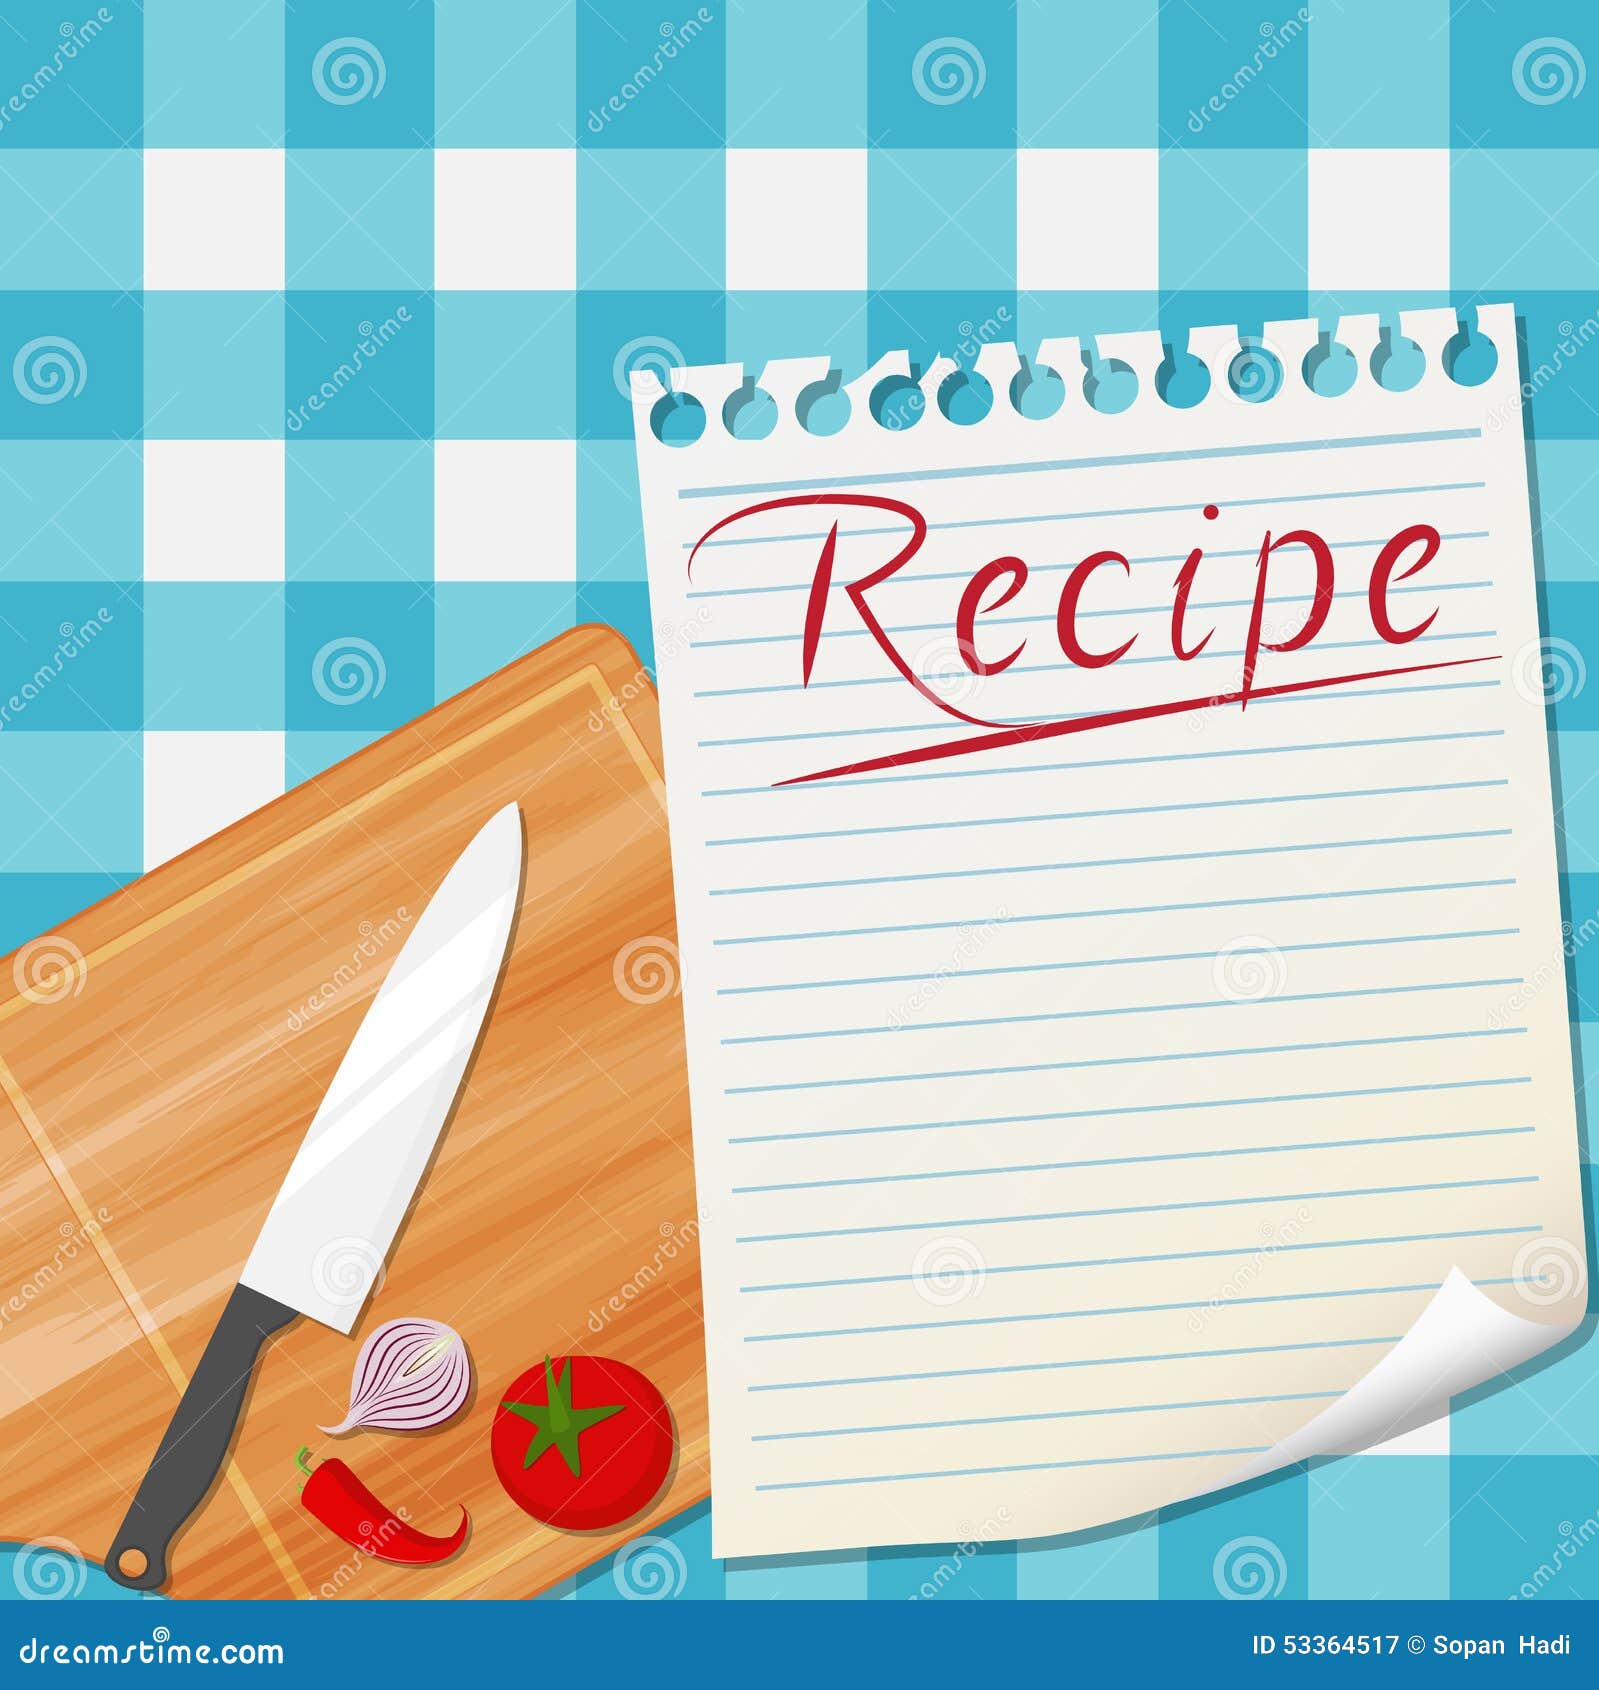 Kitchen Recipe Design Background Stock Vector 